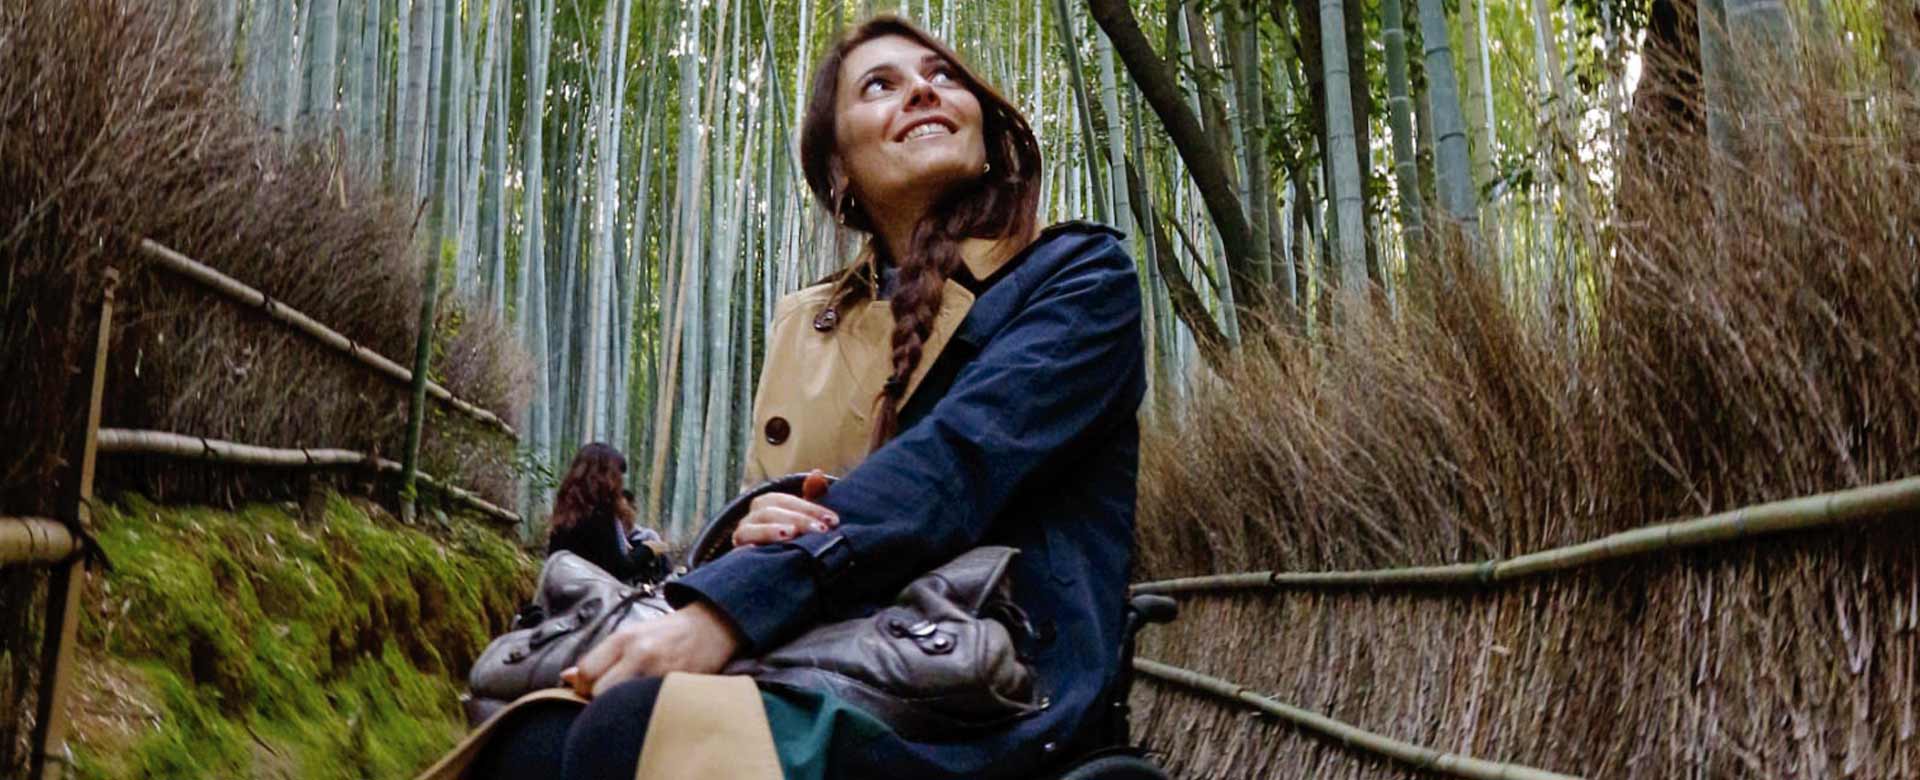 Immagine di Giulia Lamarca nella foresta di bambù di Arashiyama a Kyoto, in Giappone